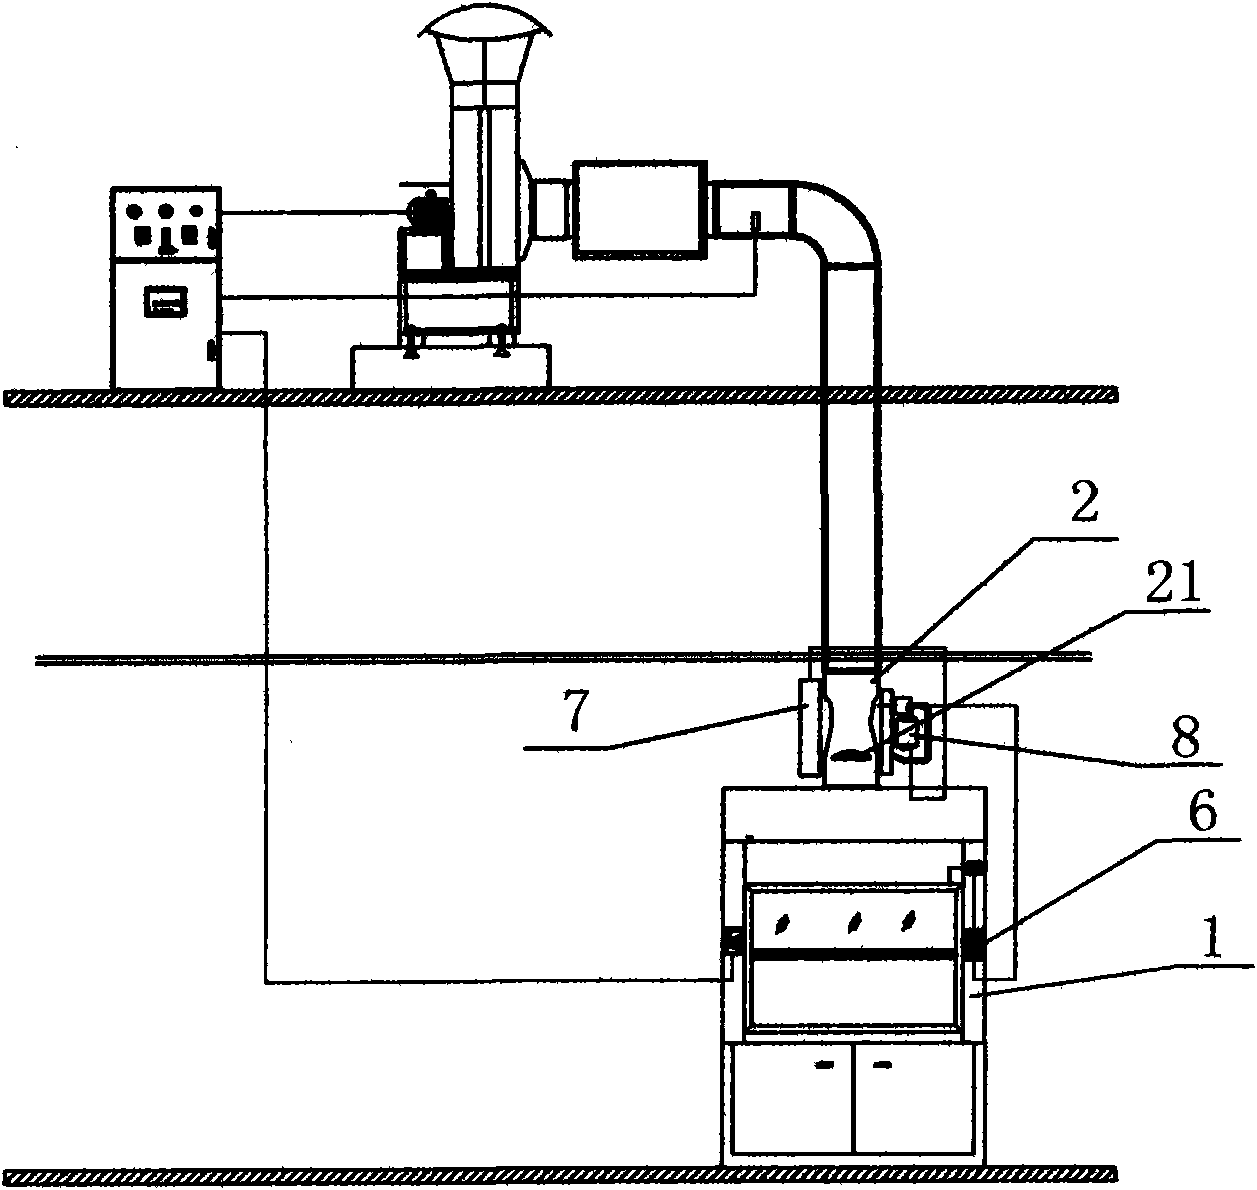 Control system of laboratory variable air volume (VAV) fume hood